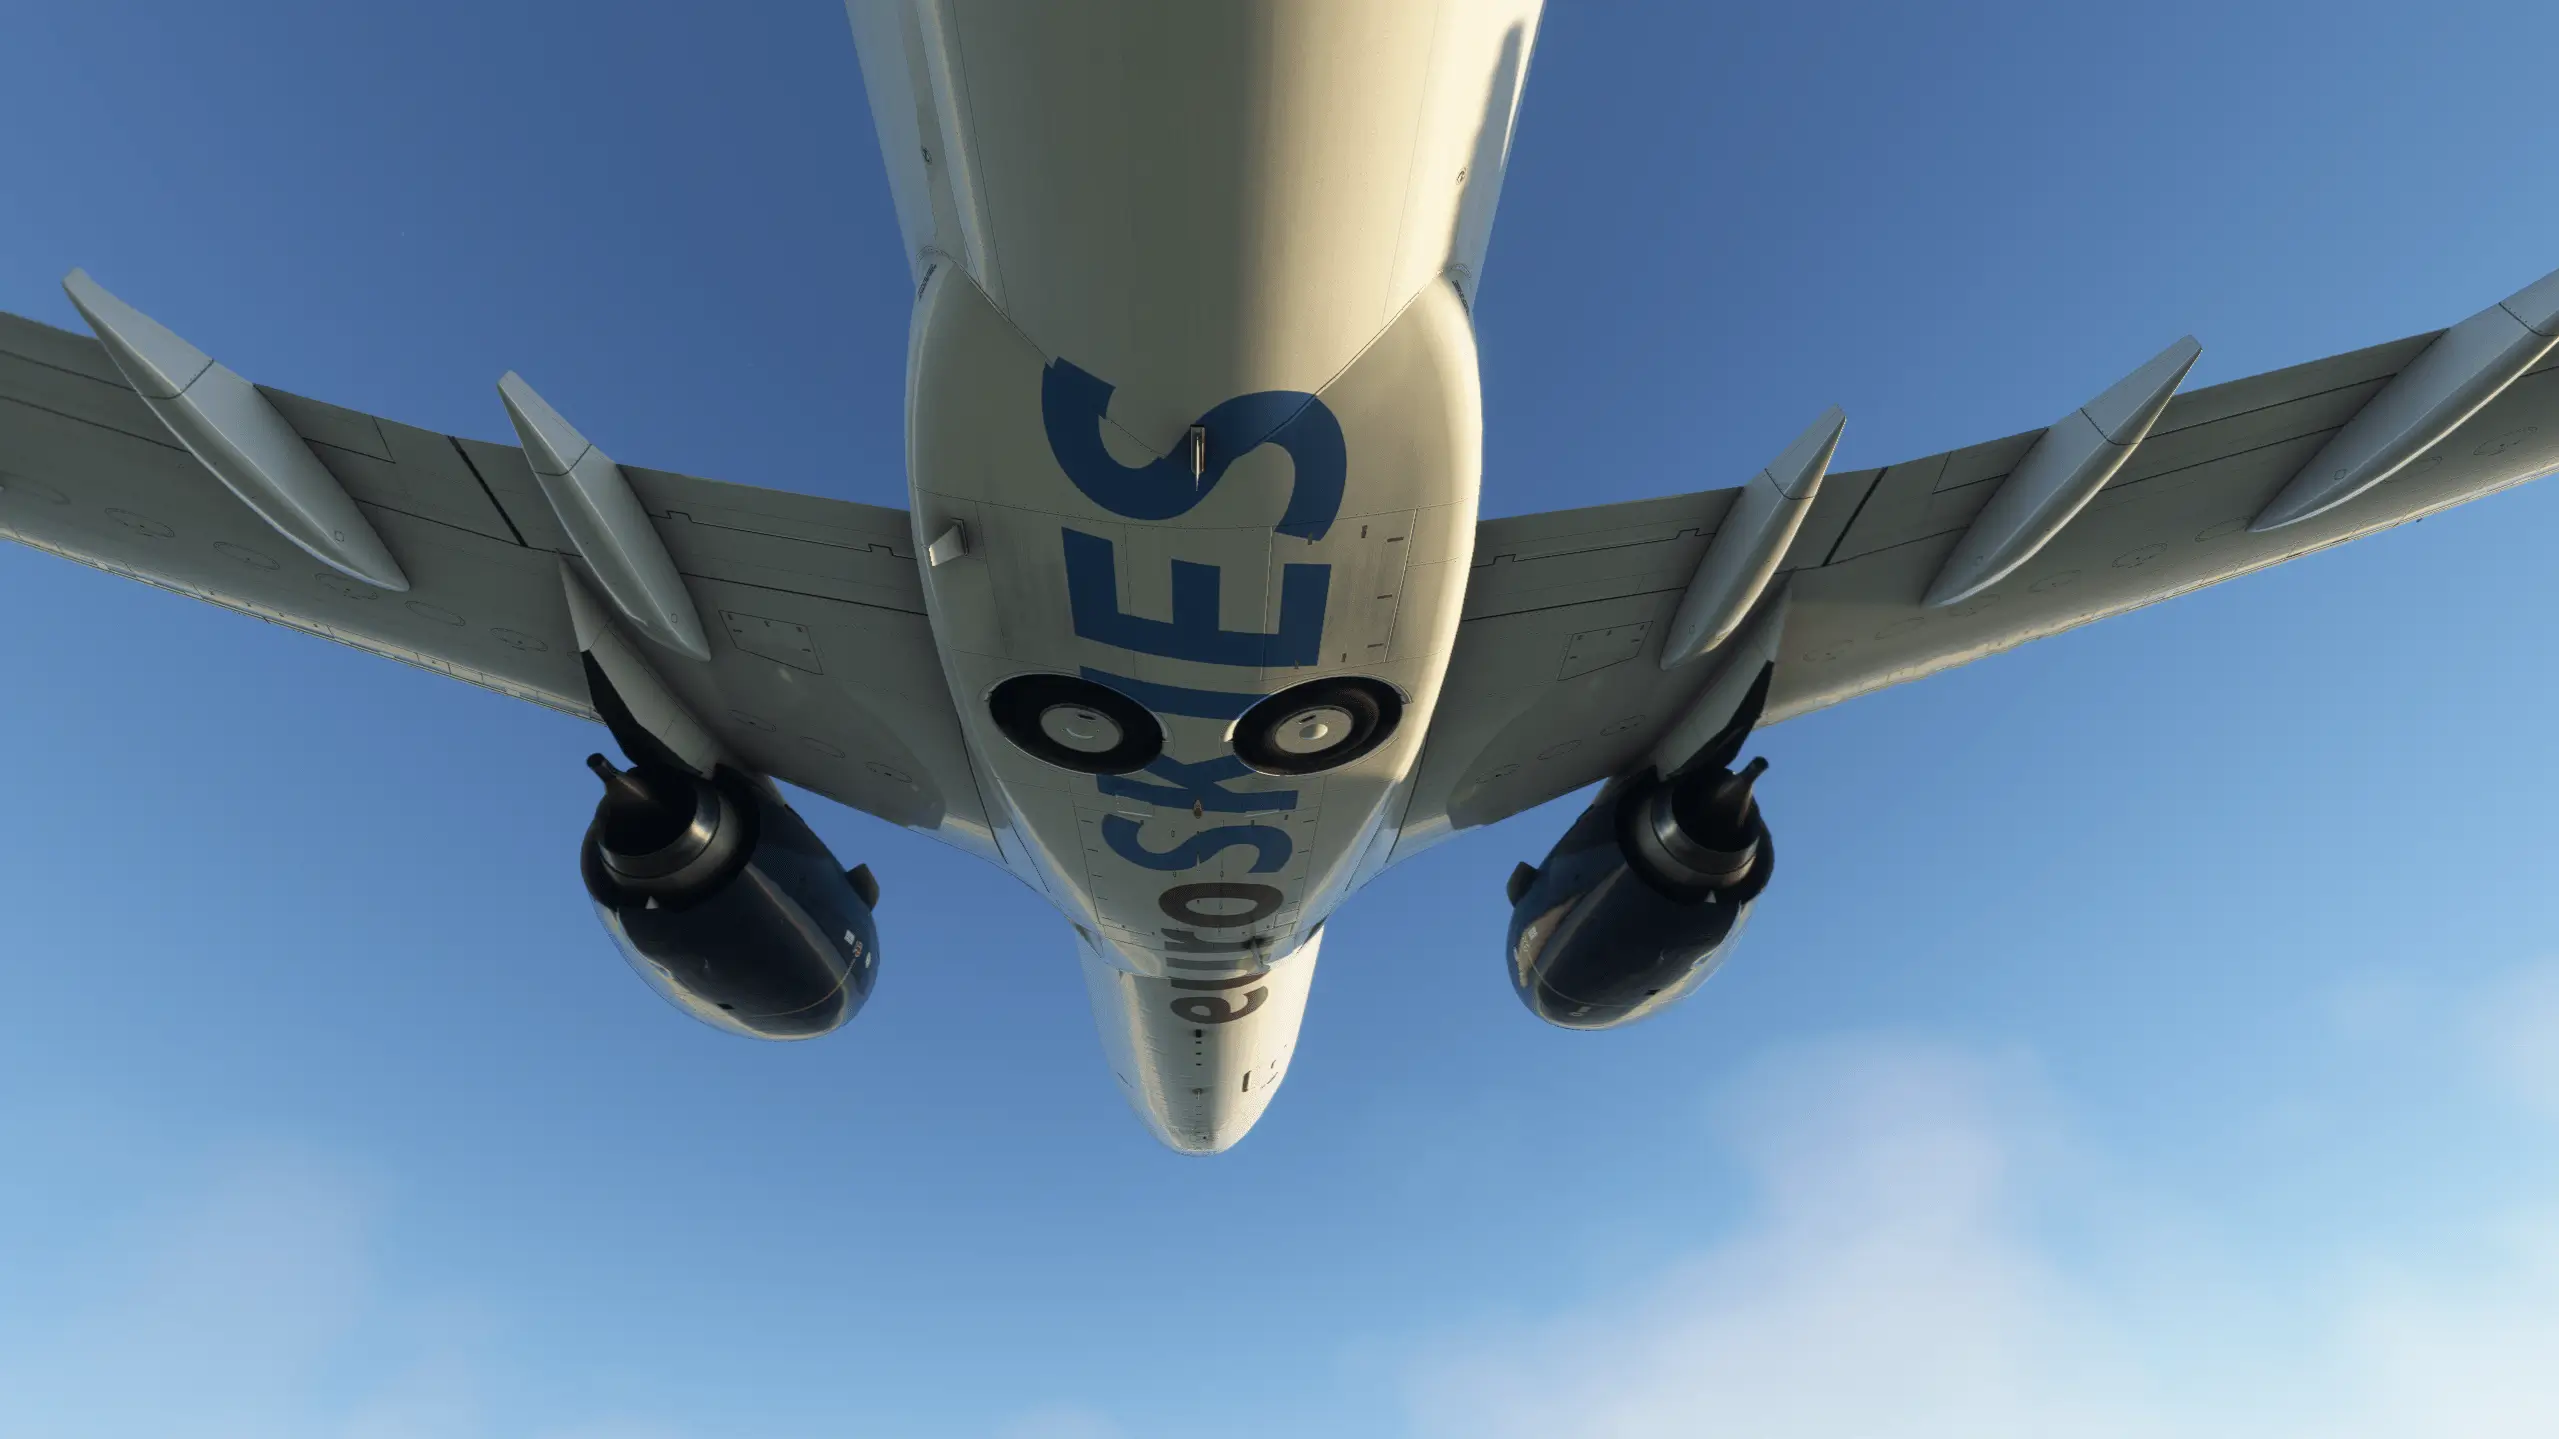 PMDG 737-800 euroSKIES virtual airline belly view with euroSKIES lettering.